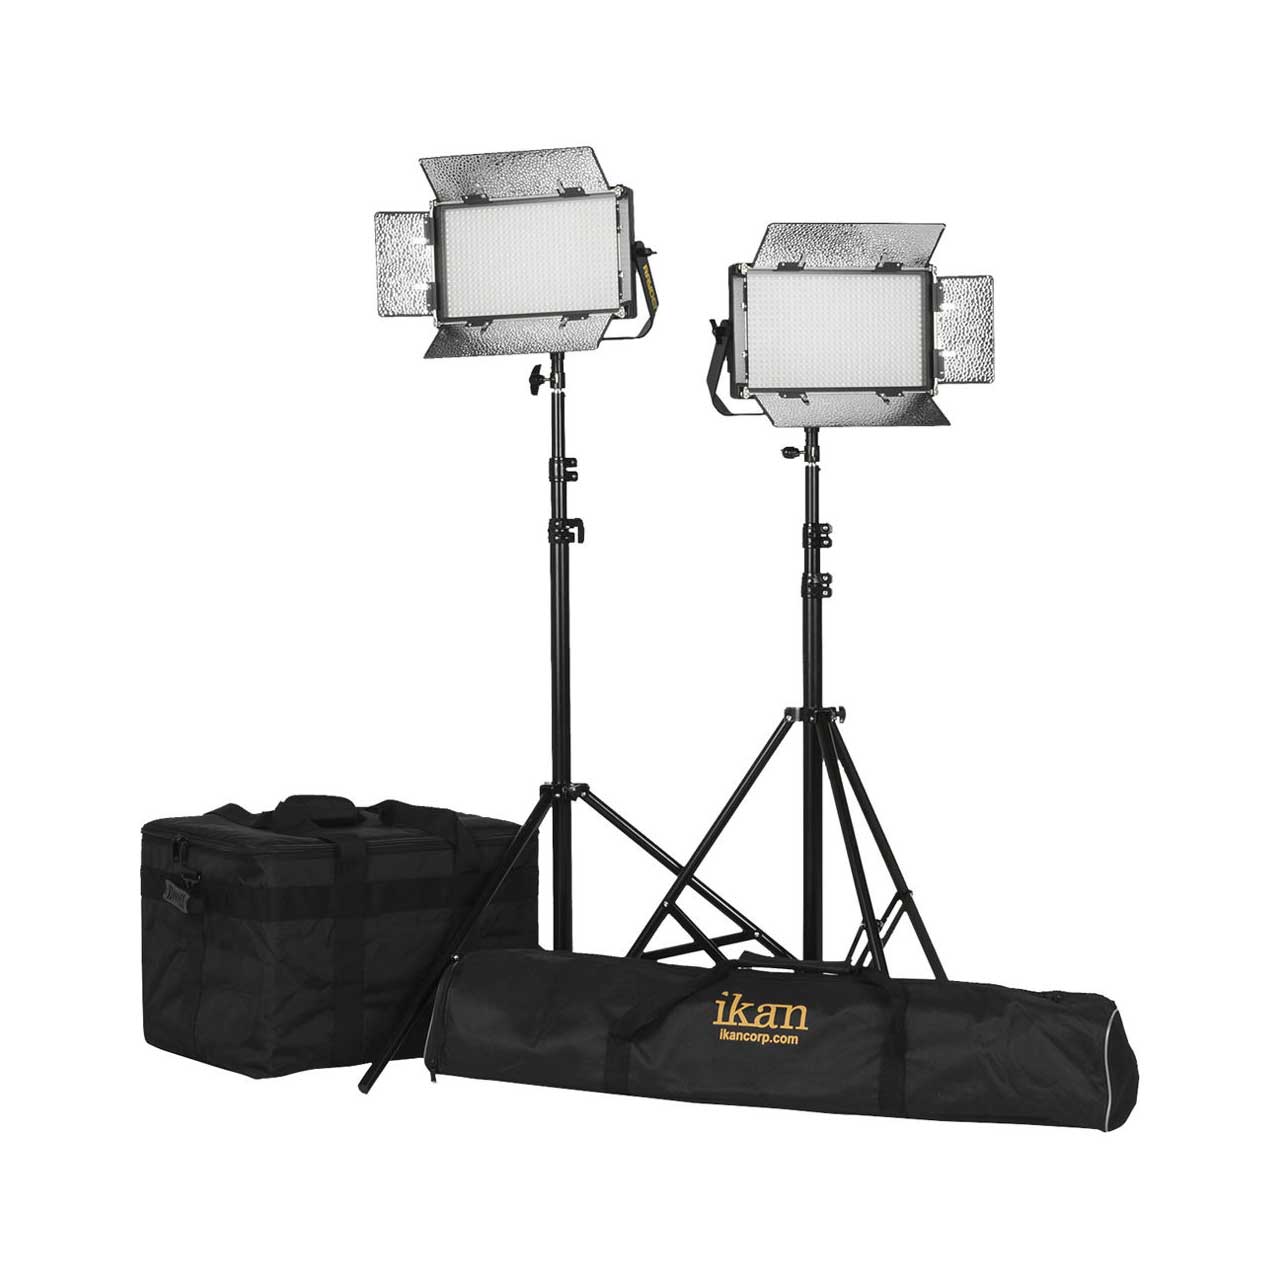 ikan RB5-2PT-KIT Kit with 2x Rayden Bi-Color Half x 1 LED Lights IKAN-RB5-2PT-KIT